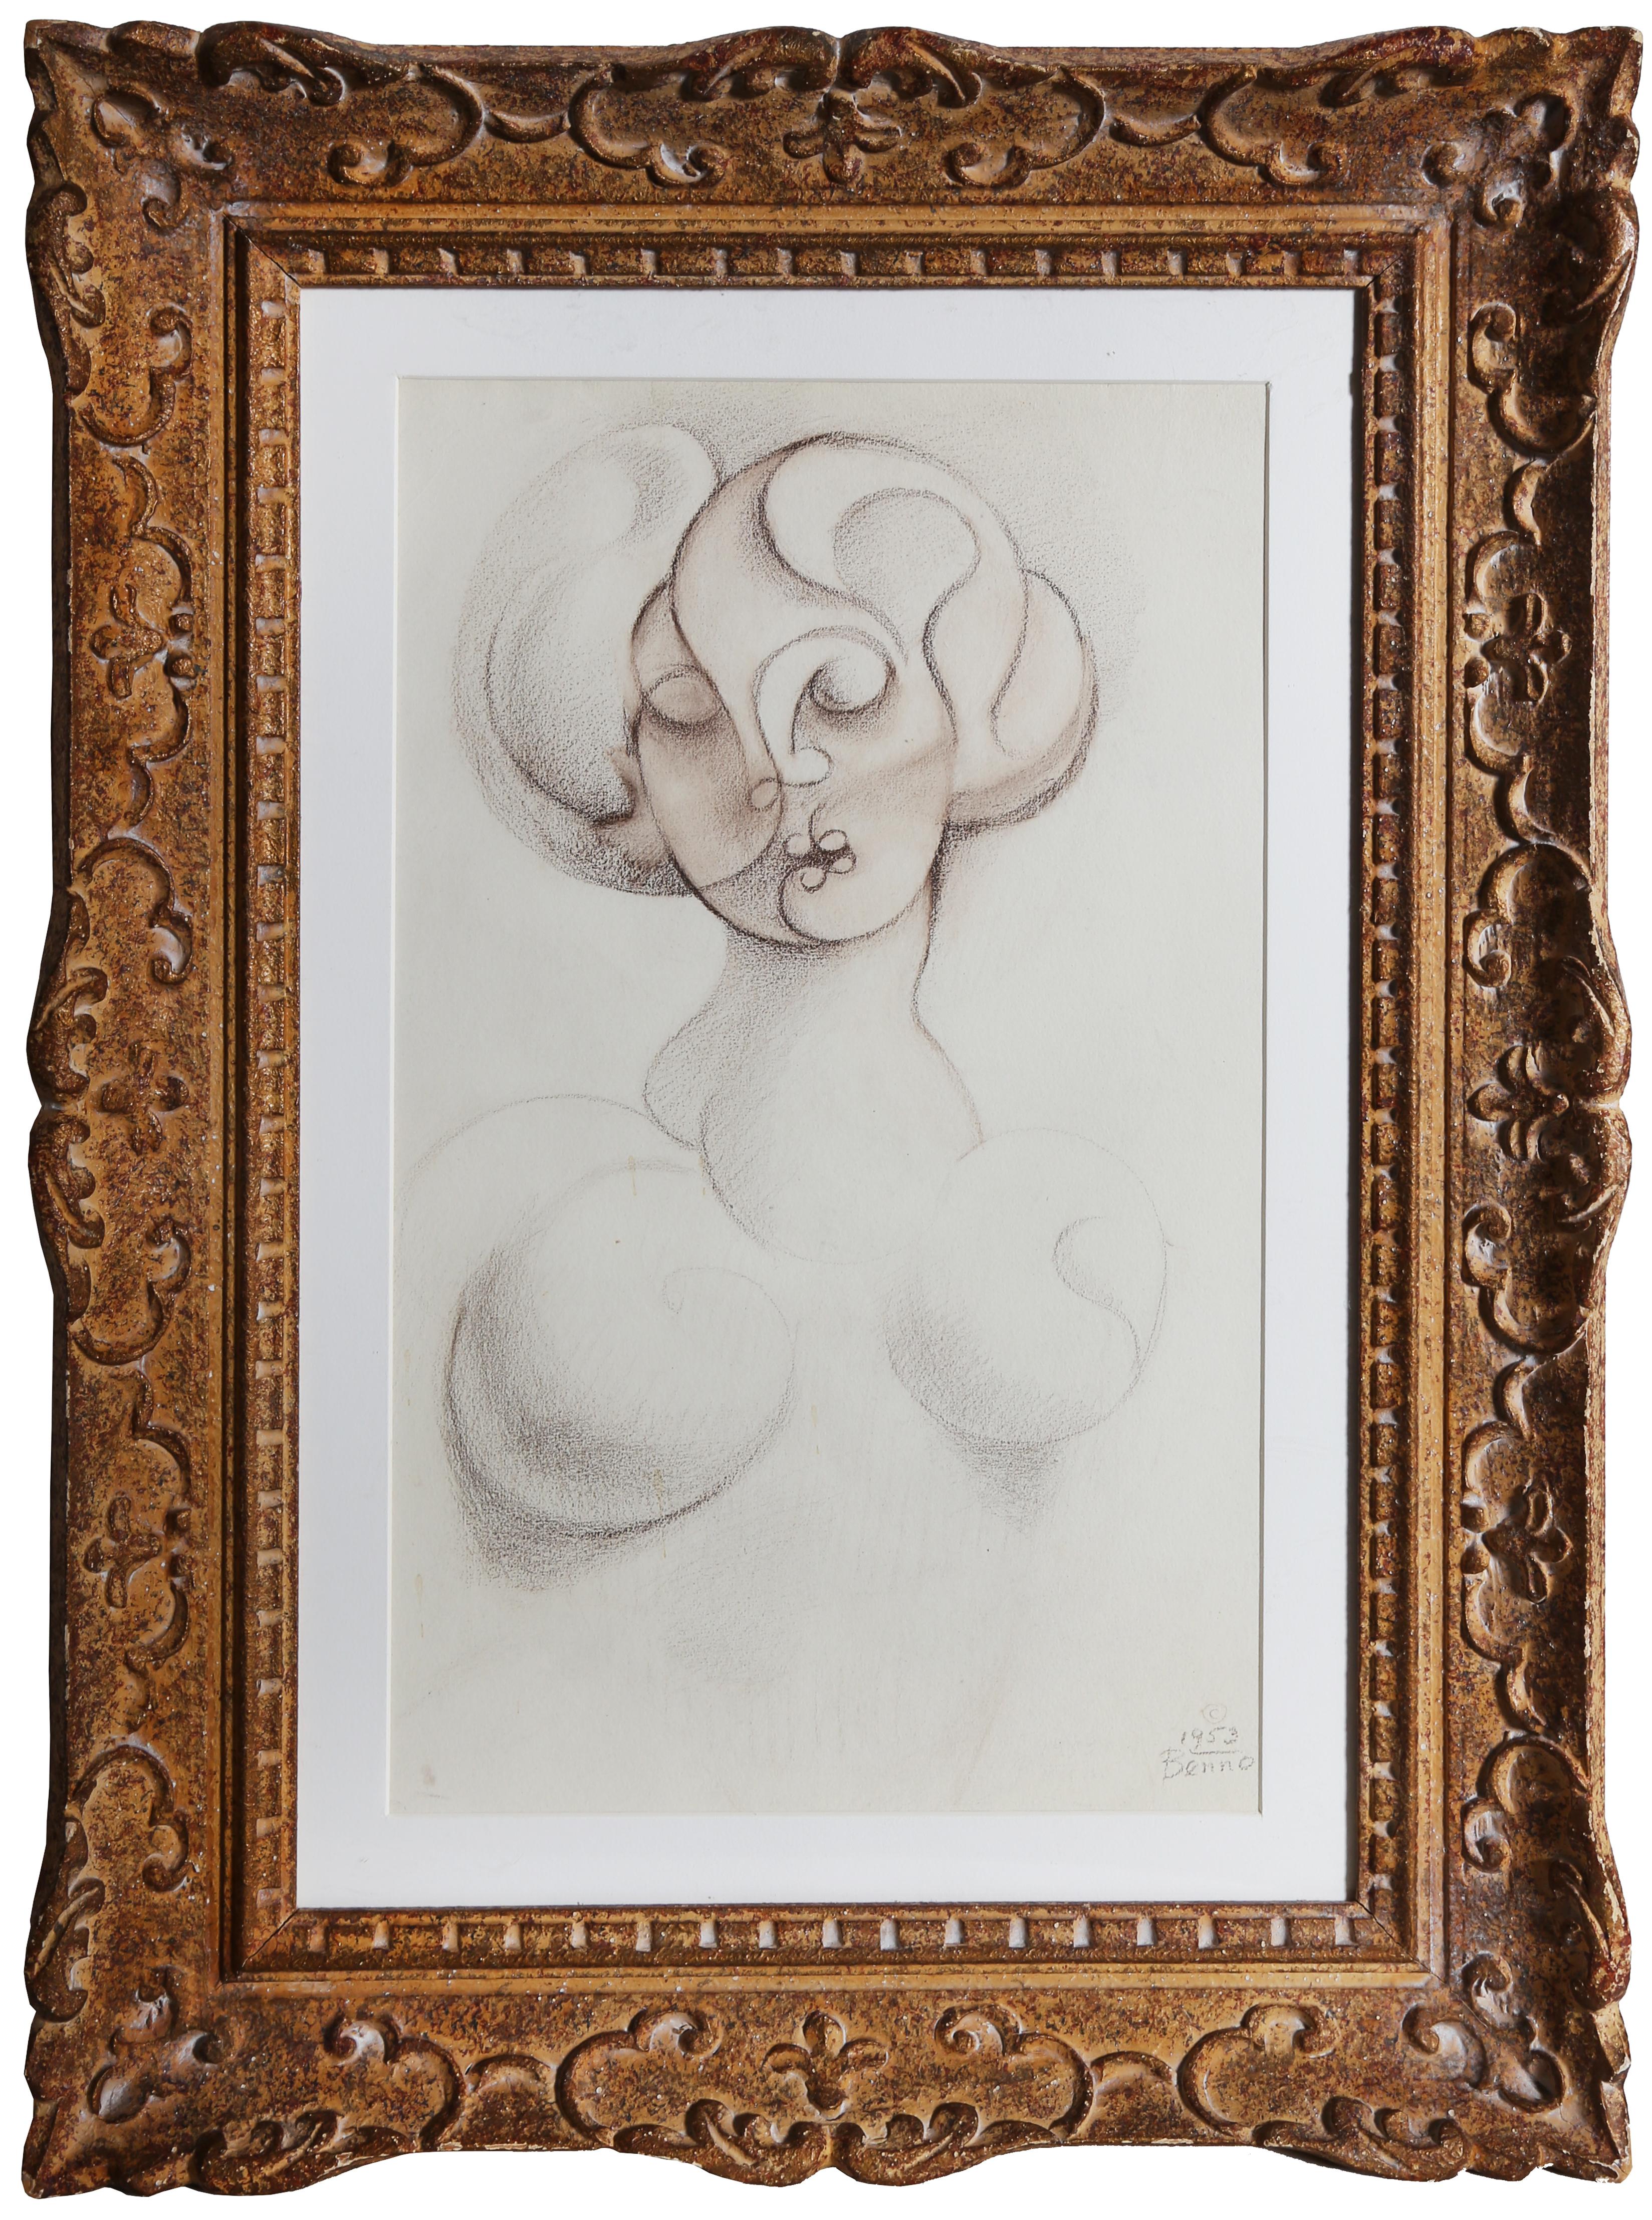 Nude Benjamin G. Benno - Portrait d'une femme, dessin cubiste au fusain et au pastel de Benjamin Benno